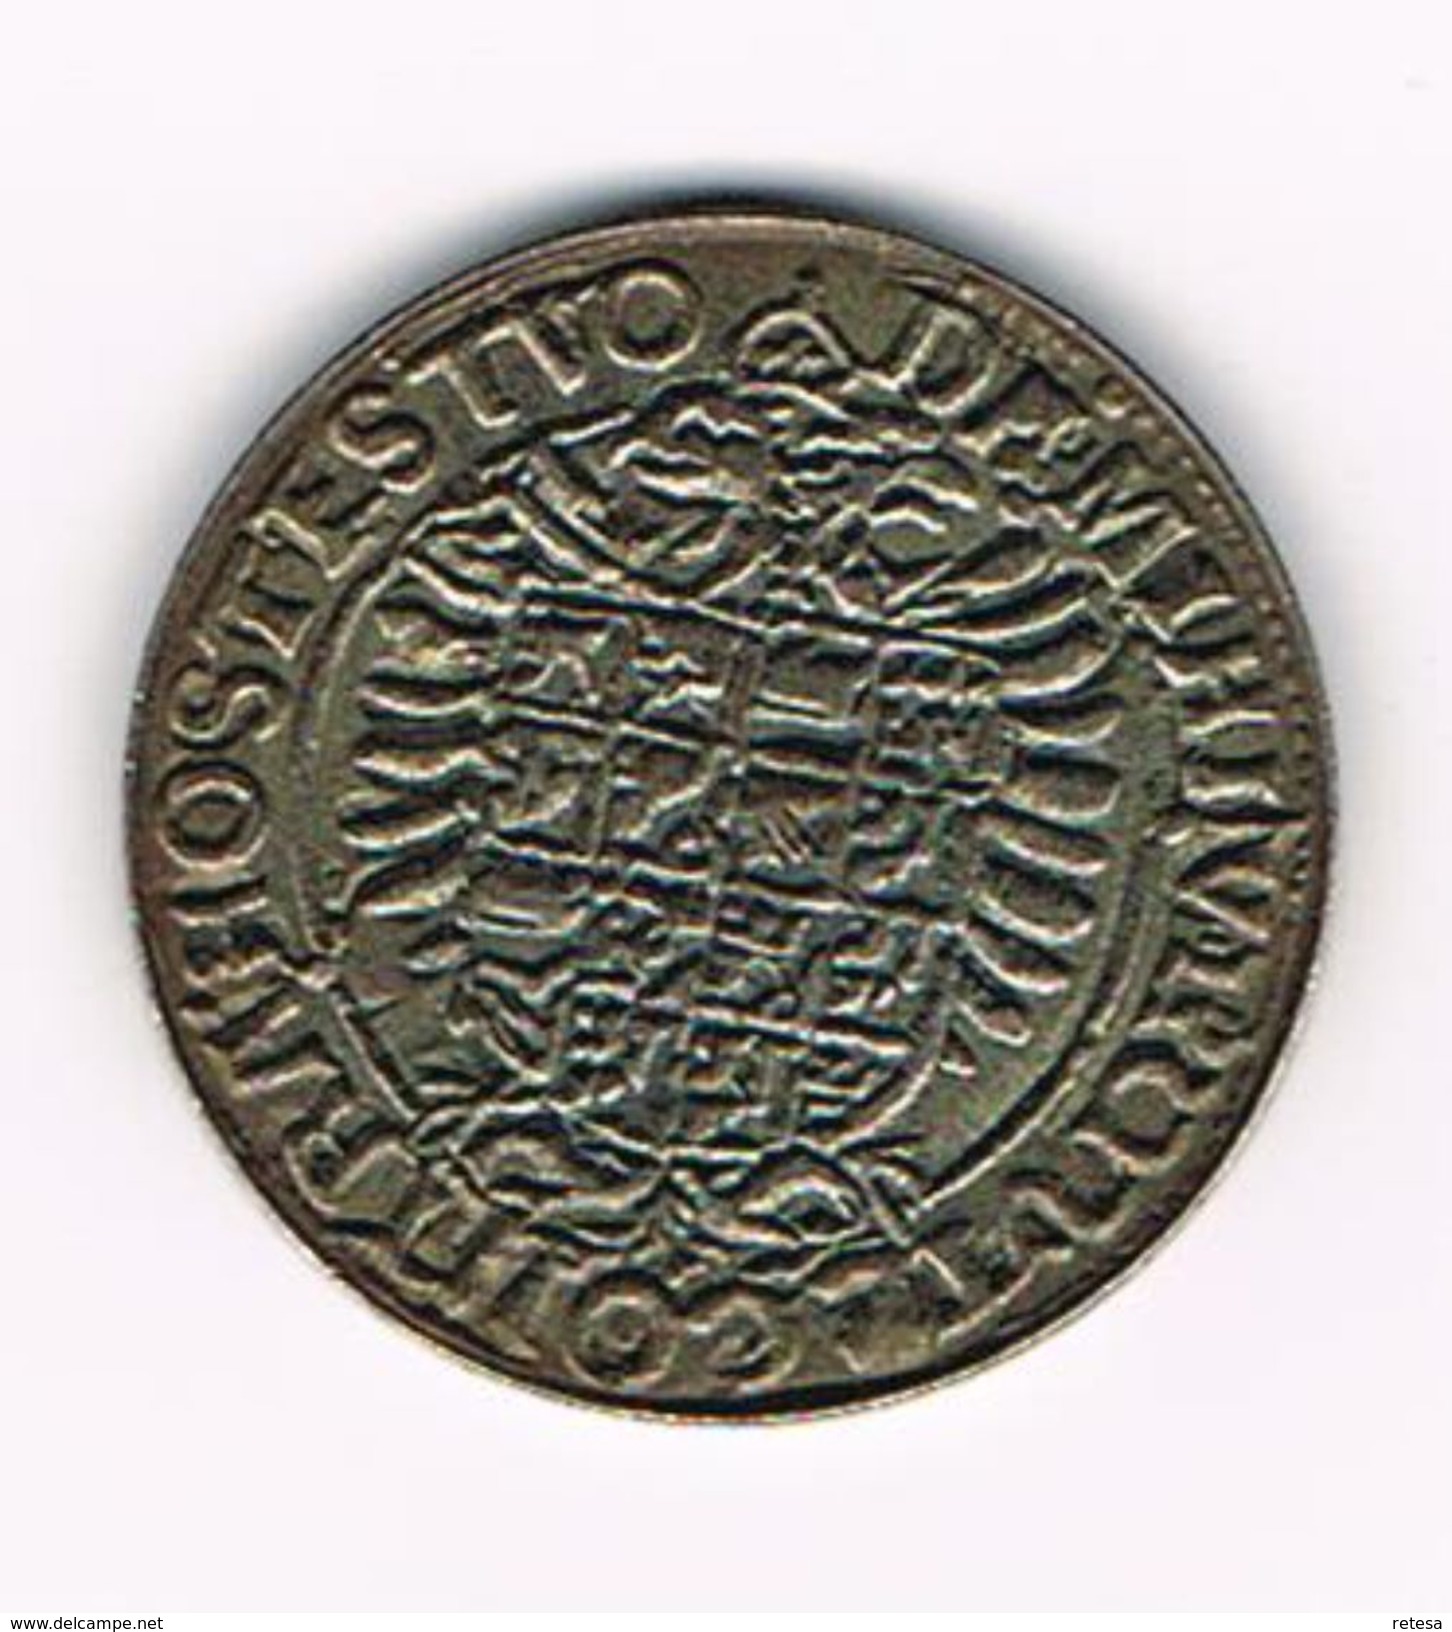 )  HERDENKINGSMUNT  REPLICA GOUDEN REAAL KAREL V KAROLUS 1542-56 - Monedas Elongadas (elongated Coins)